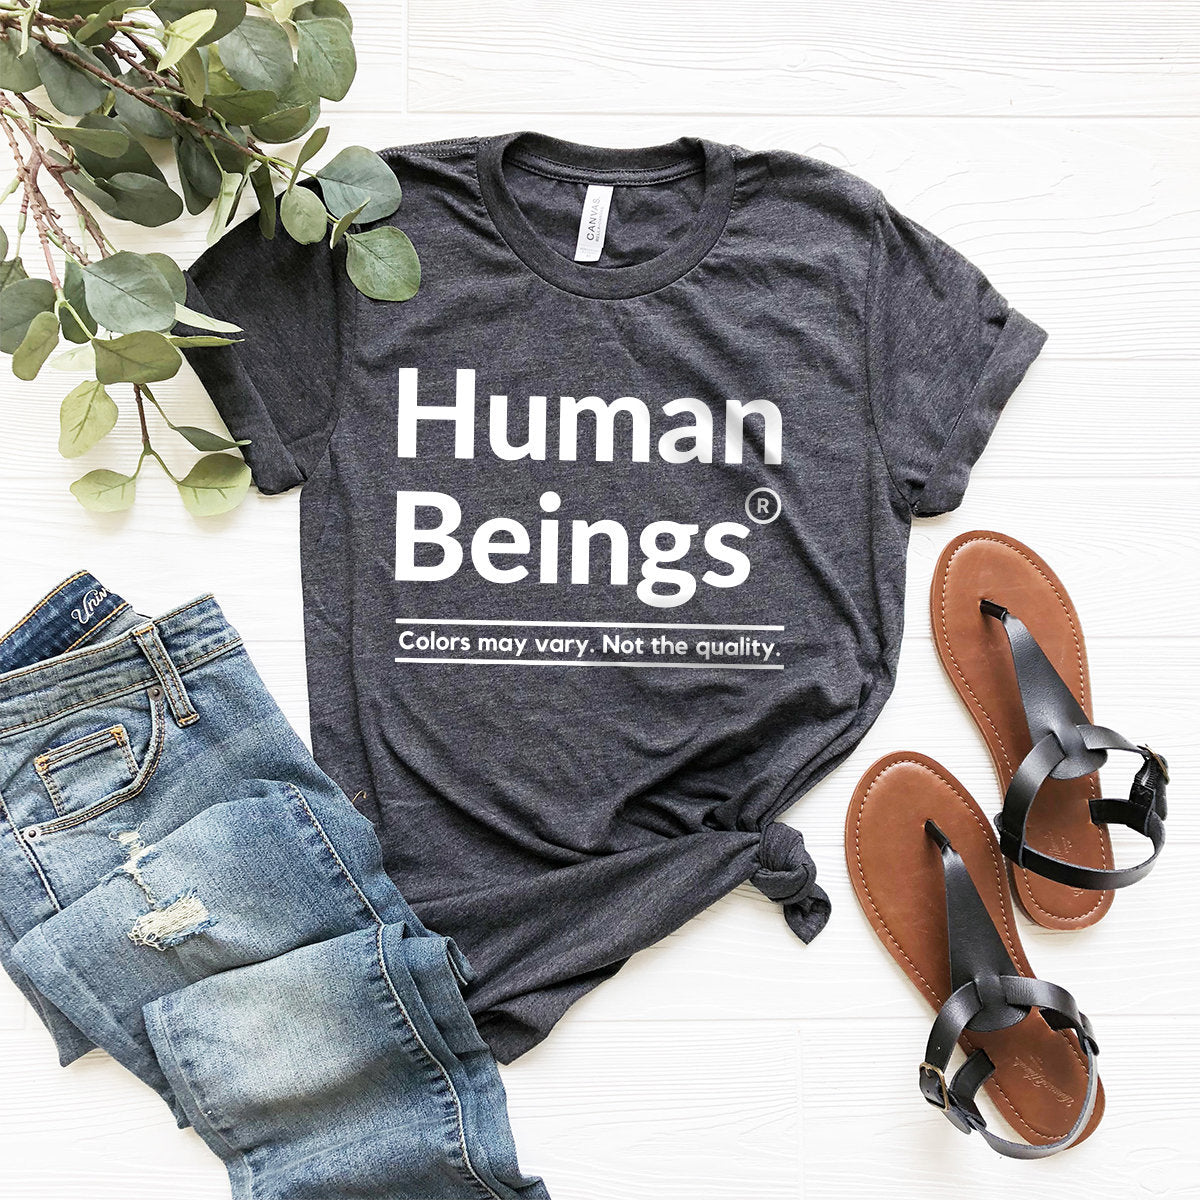 Human Being T-Shirt, BLM Shirt, LGBT Quote Shirt, Equal Rights Shirt, Human Rights Shirt, Gender Equality Shirt, Pride Shirt, Protest Shirt - Fastdeliverytees.com